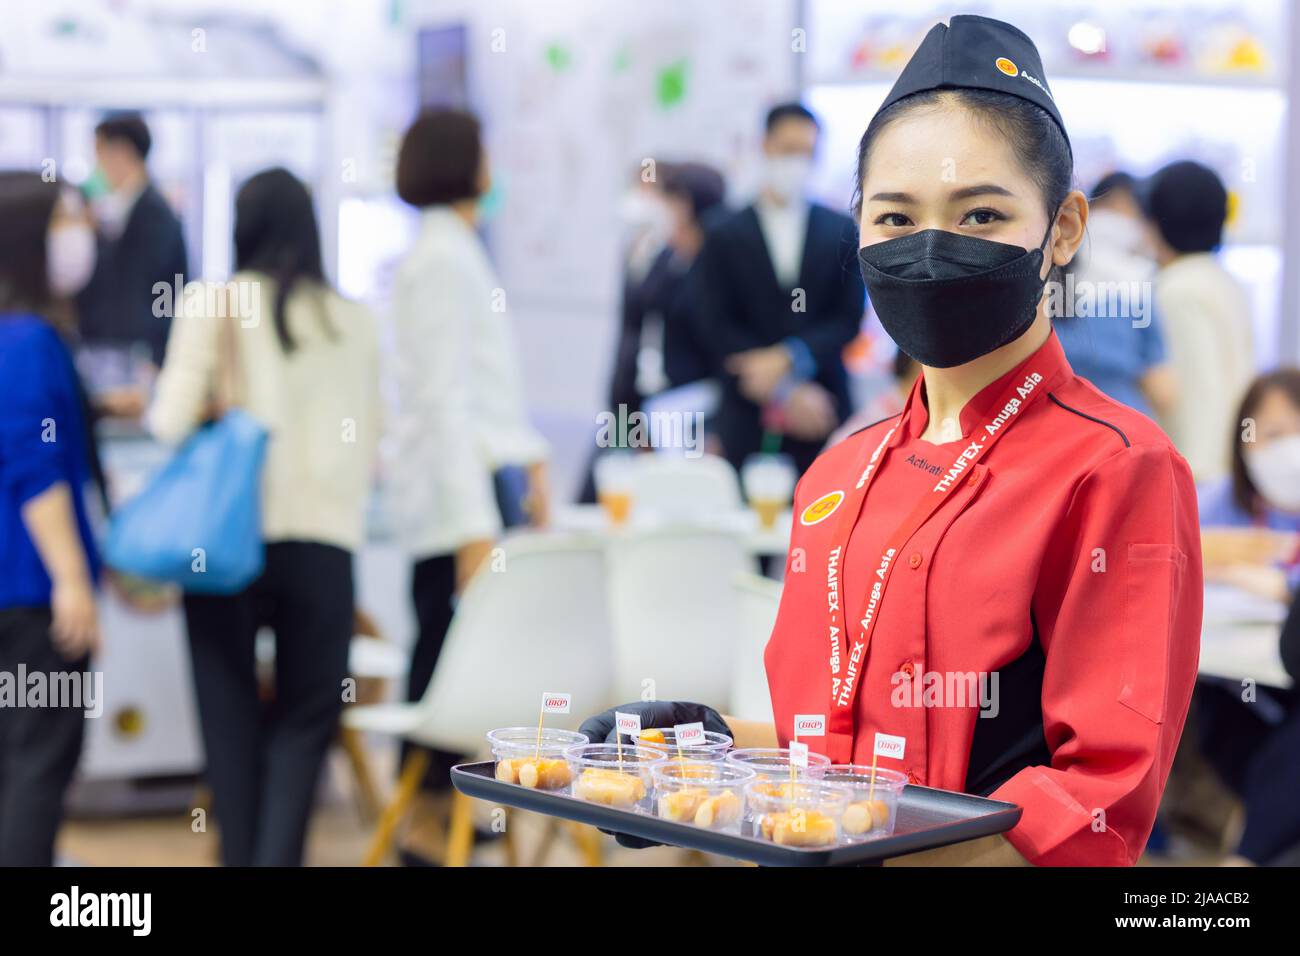 Lebensmittel-Produkte kostenlose Probe fördern Mädchen pritty Frau Modell zum Kunden zu Fuß in Food expo Festival Event Hall.25 Mai 2022.Bangkok, THAILAND. Stockfoto